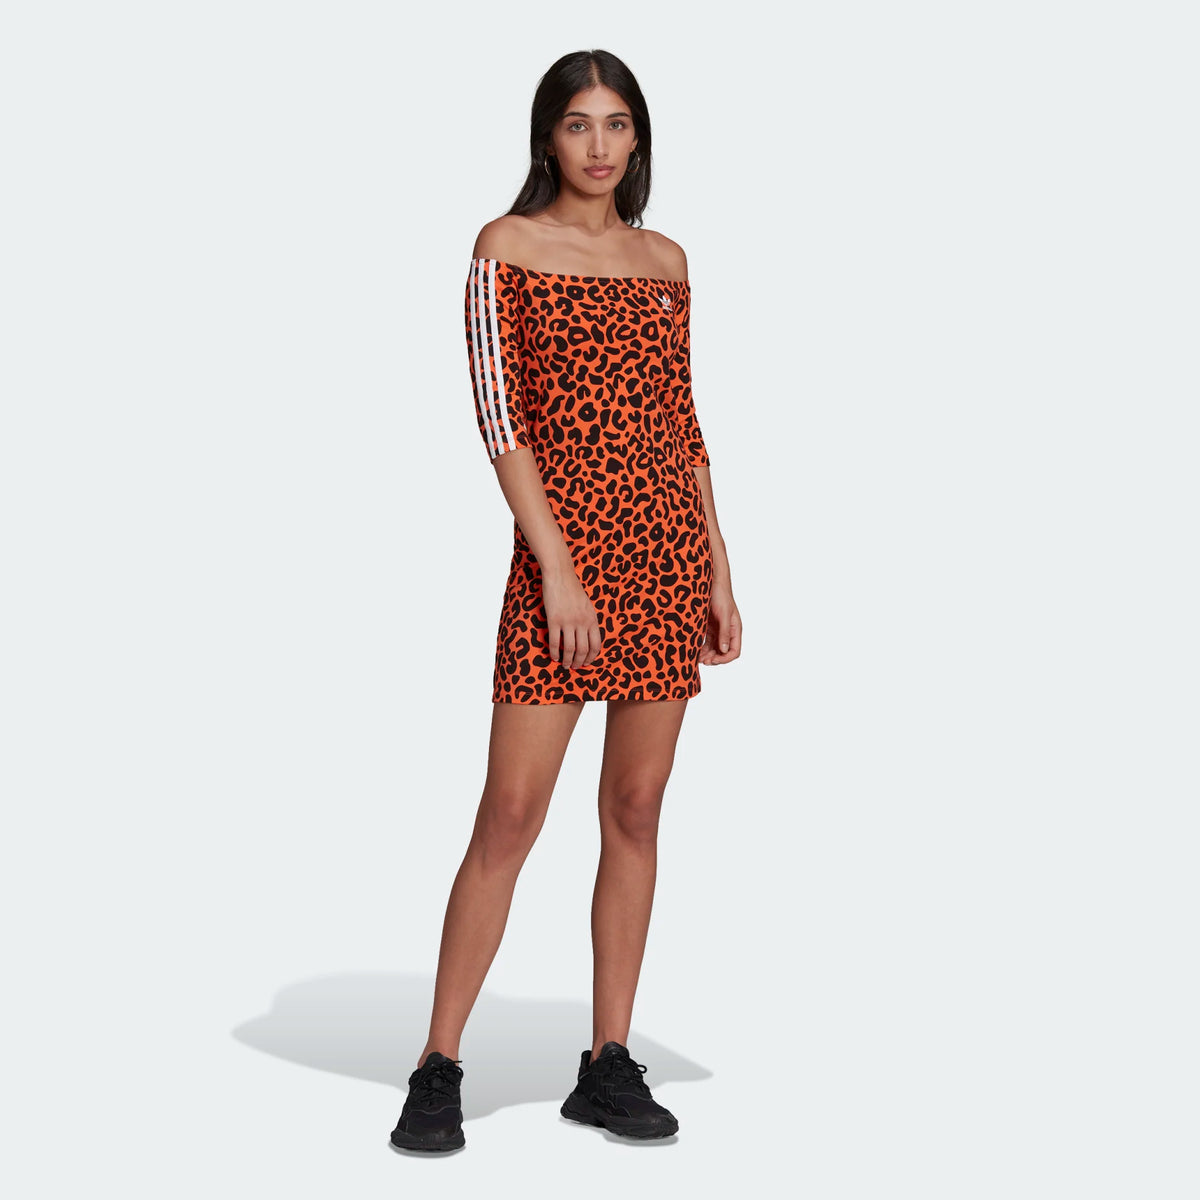 tradesports.co.uk Adidas Originals Women's x Rich Mnisi Leopard Print Dress